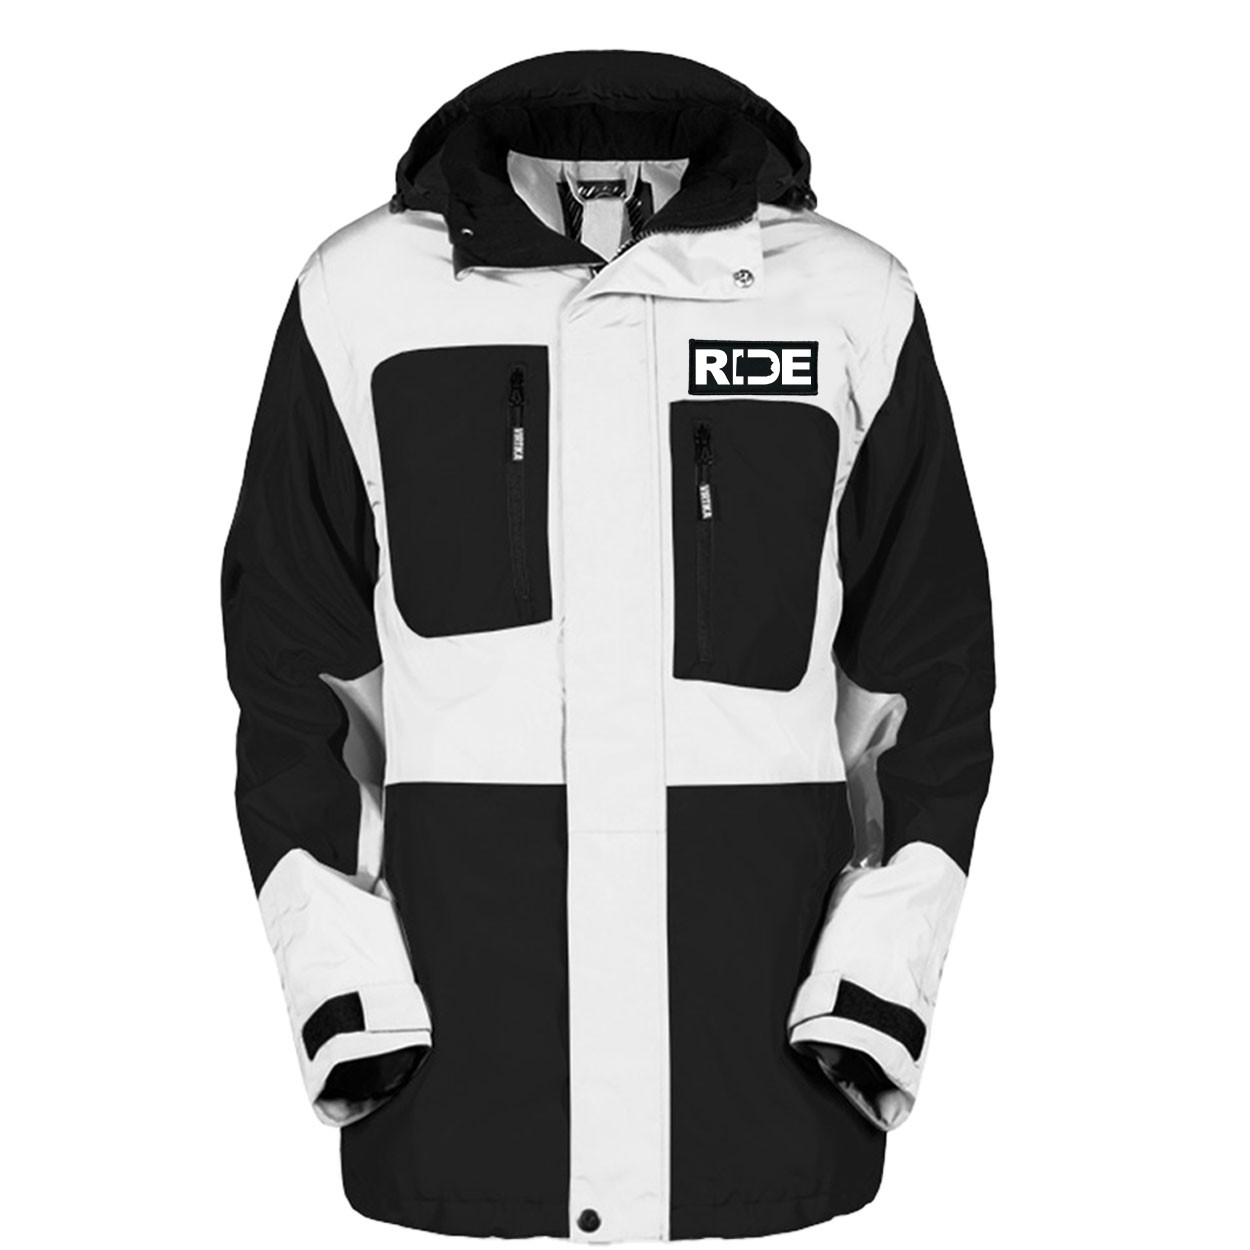 Ride Pennsylvania Pro Waterproof Breathable Winter Virtika Jacket Black/White (White Logo)